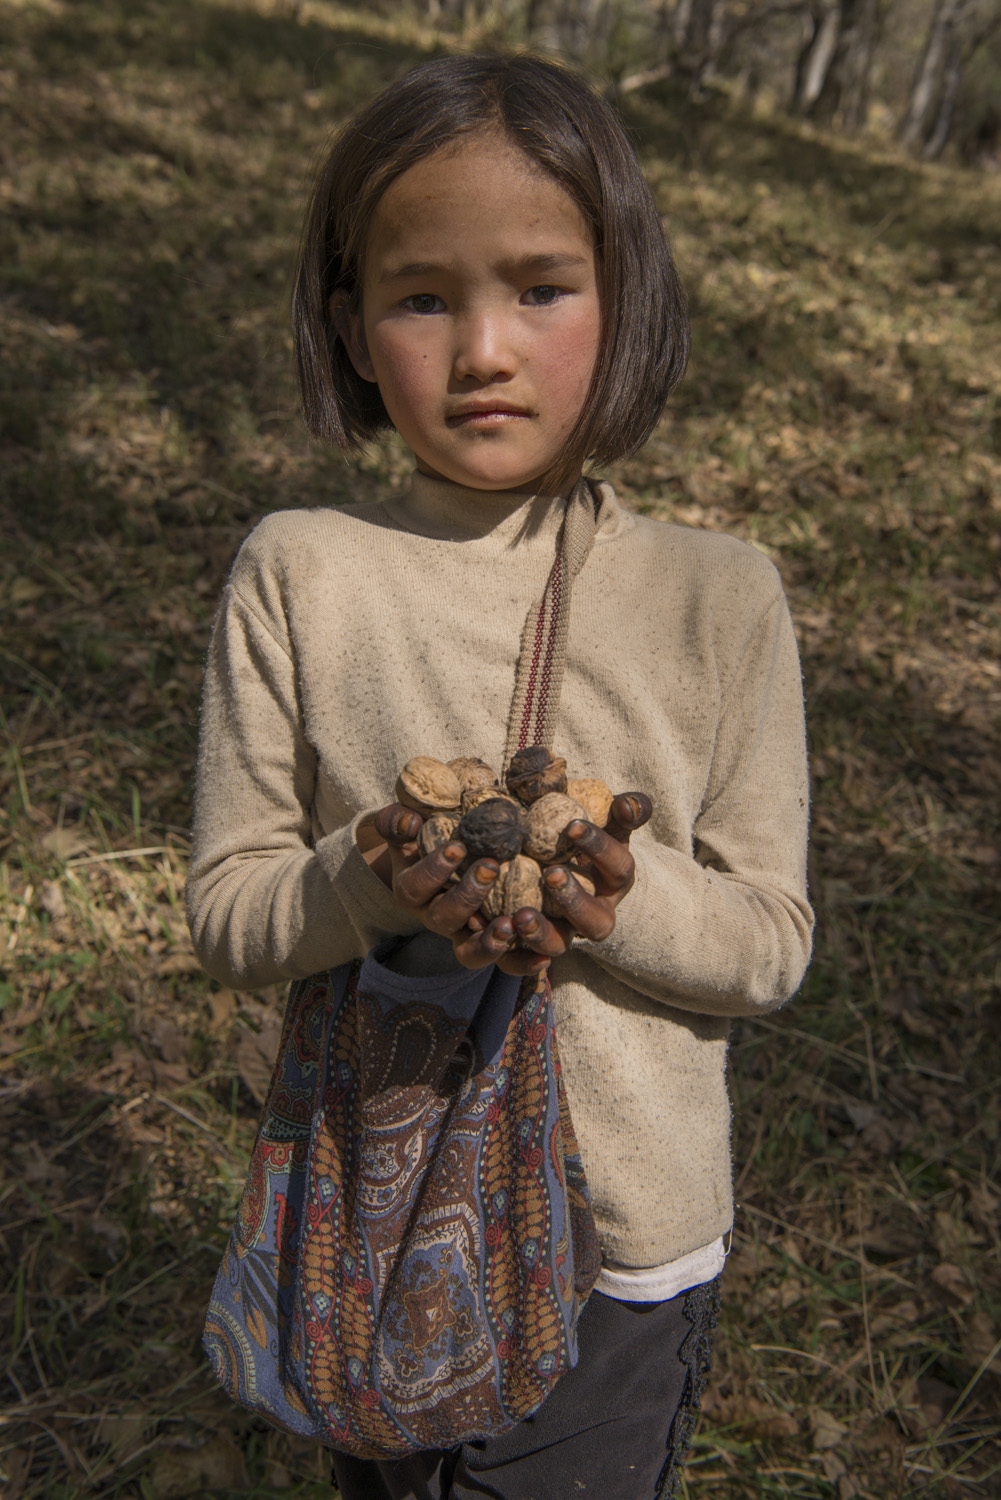 walnuts-picking-kyrgyzstan-child-arslanbob-soviet-union-russia-girl-picking-walnuts.jpg